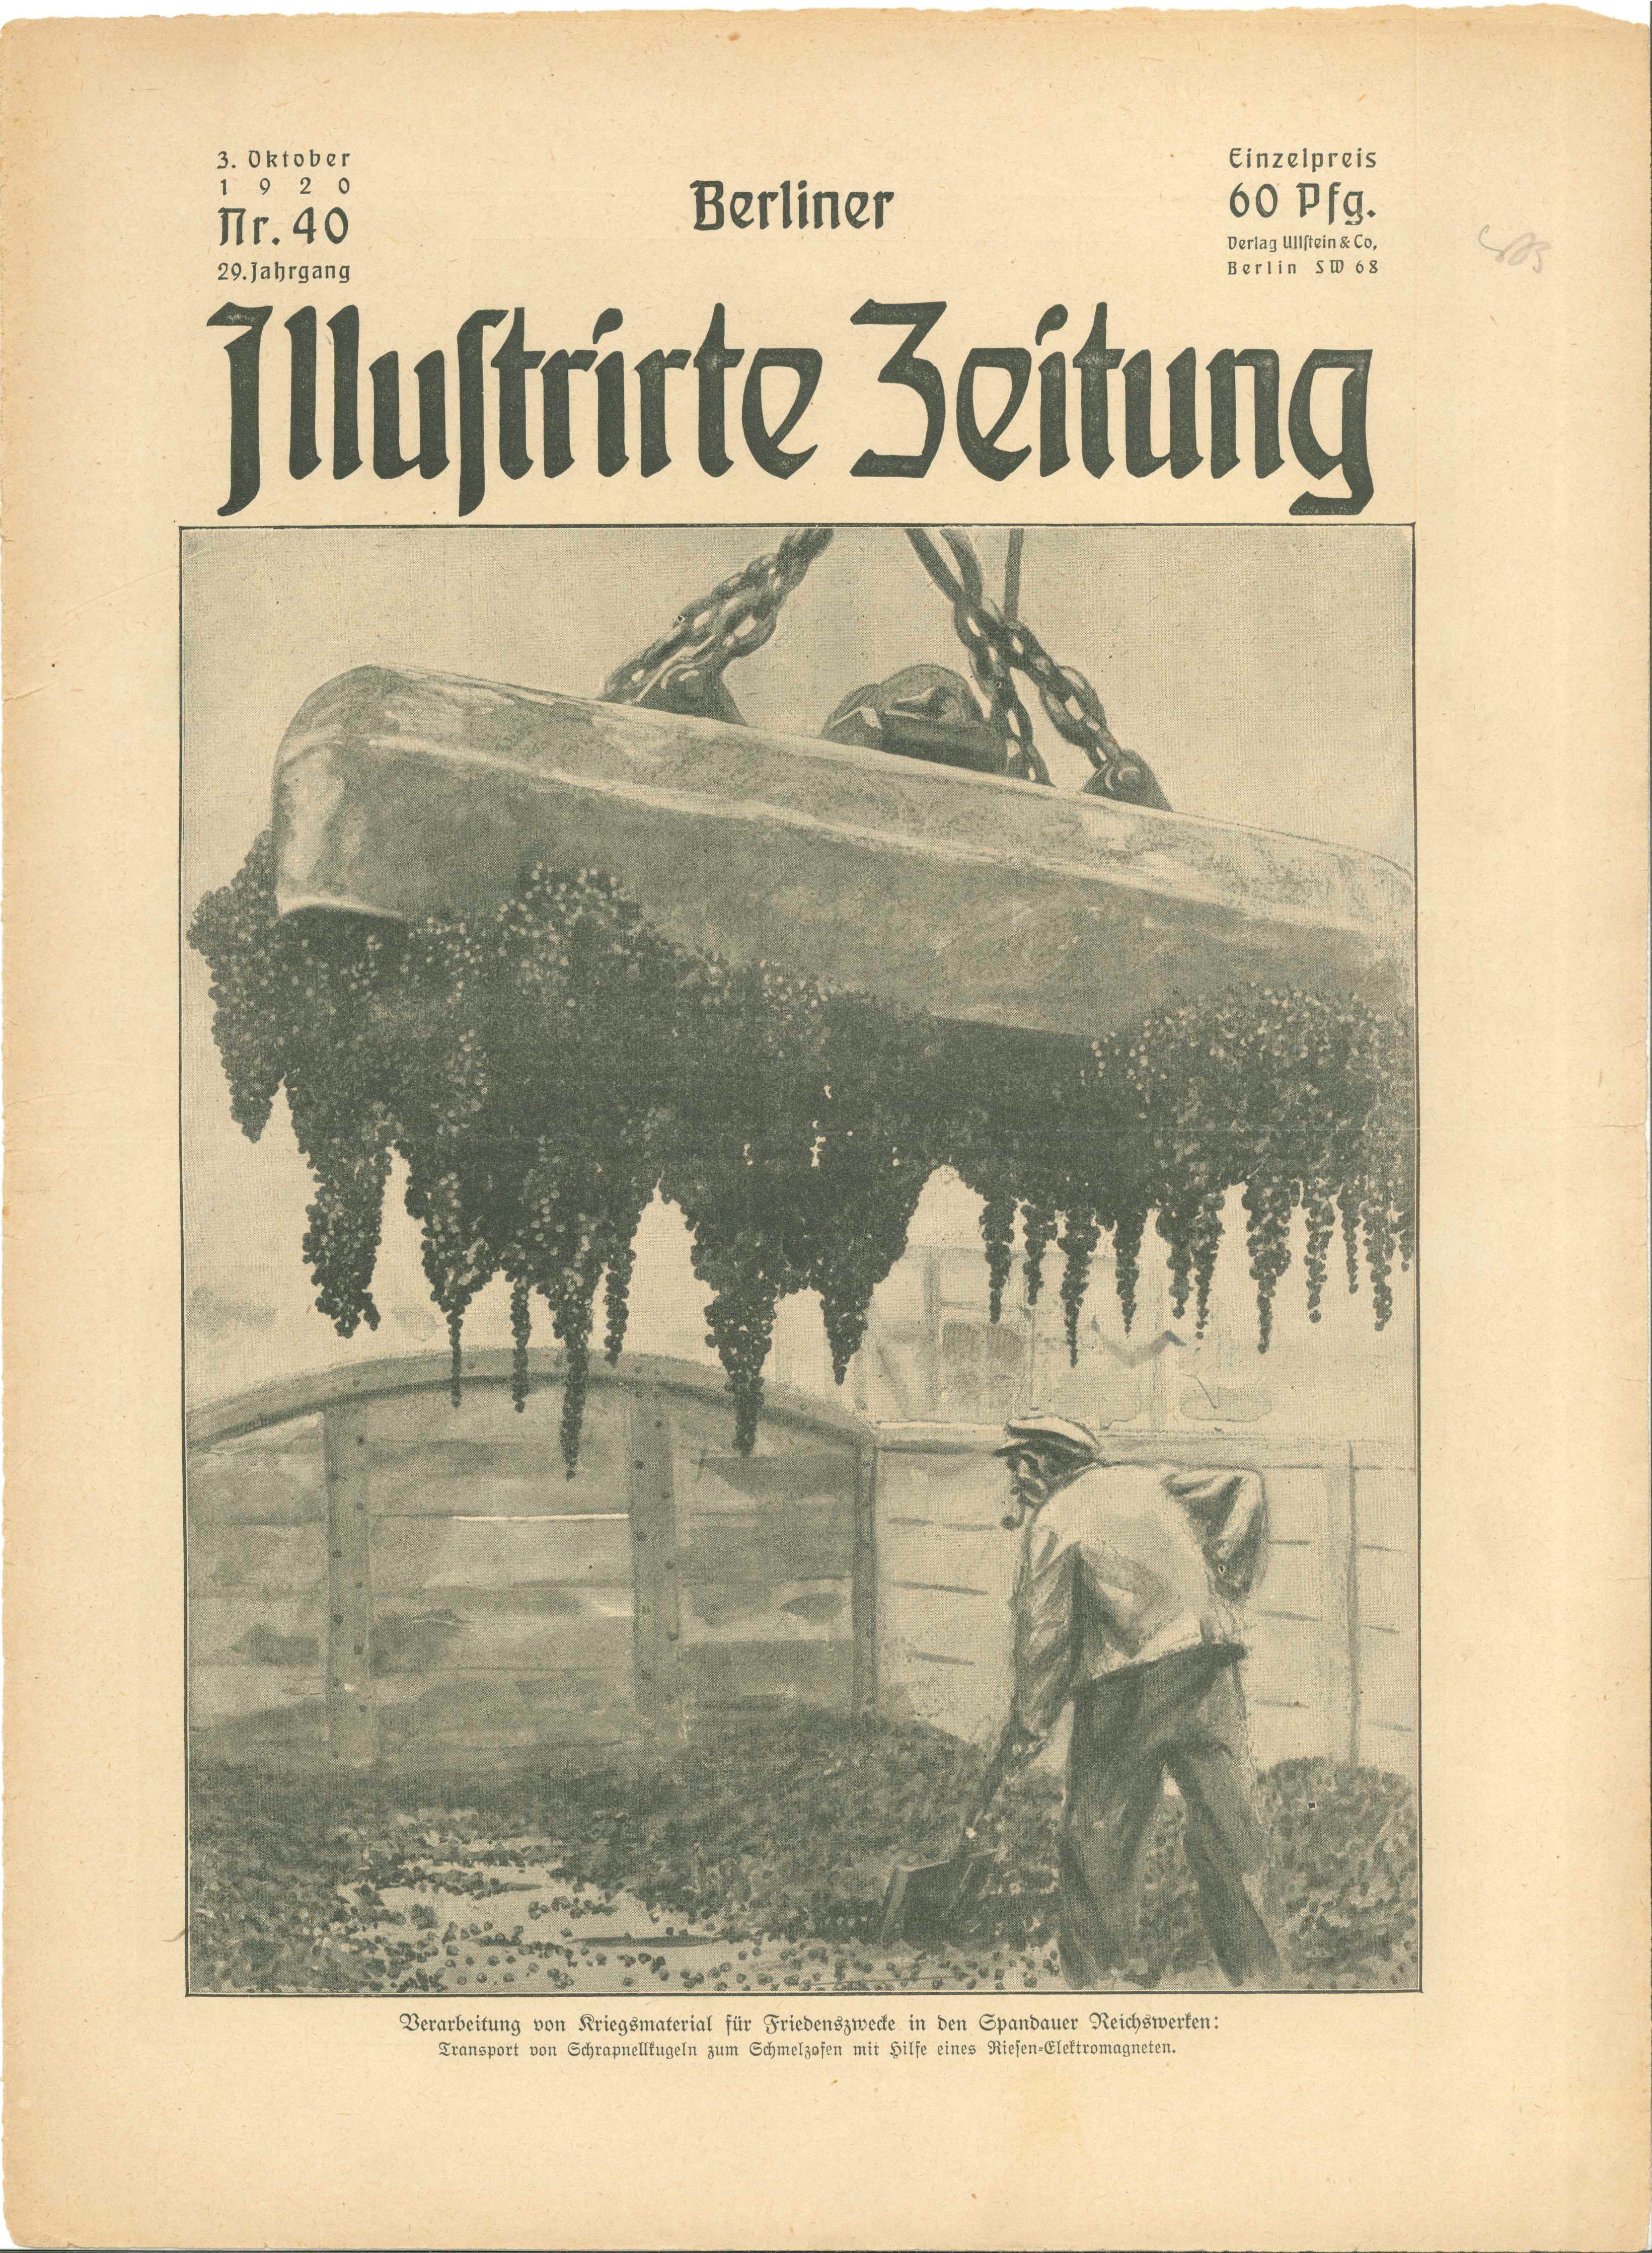 BIZ, Nr. 40, 1920, Titelseite (Kurt Tucholsky Literaturmuseum CC BY-NC-SA)